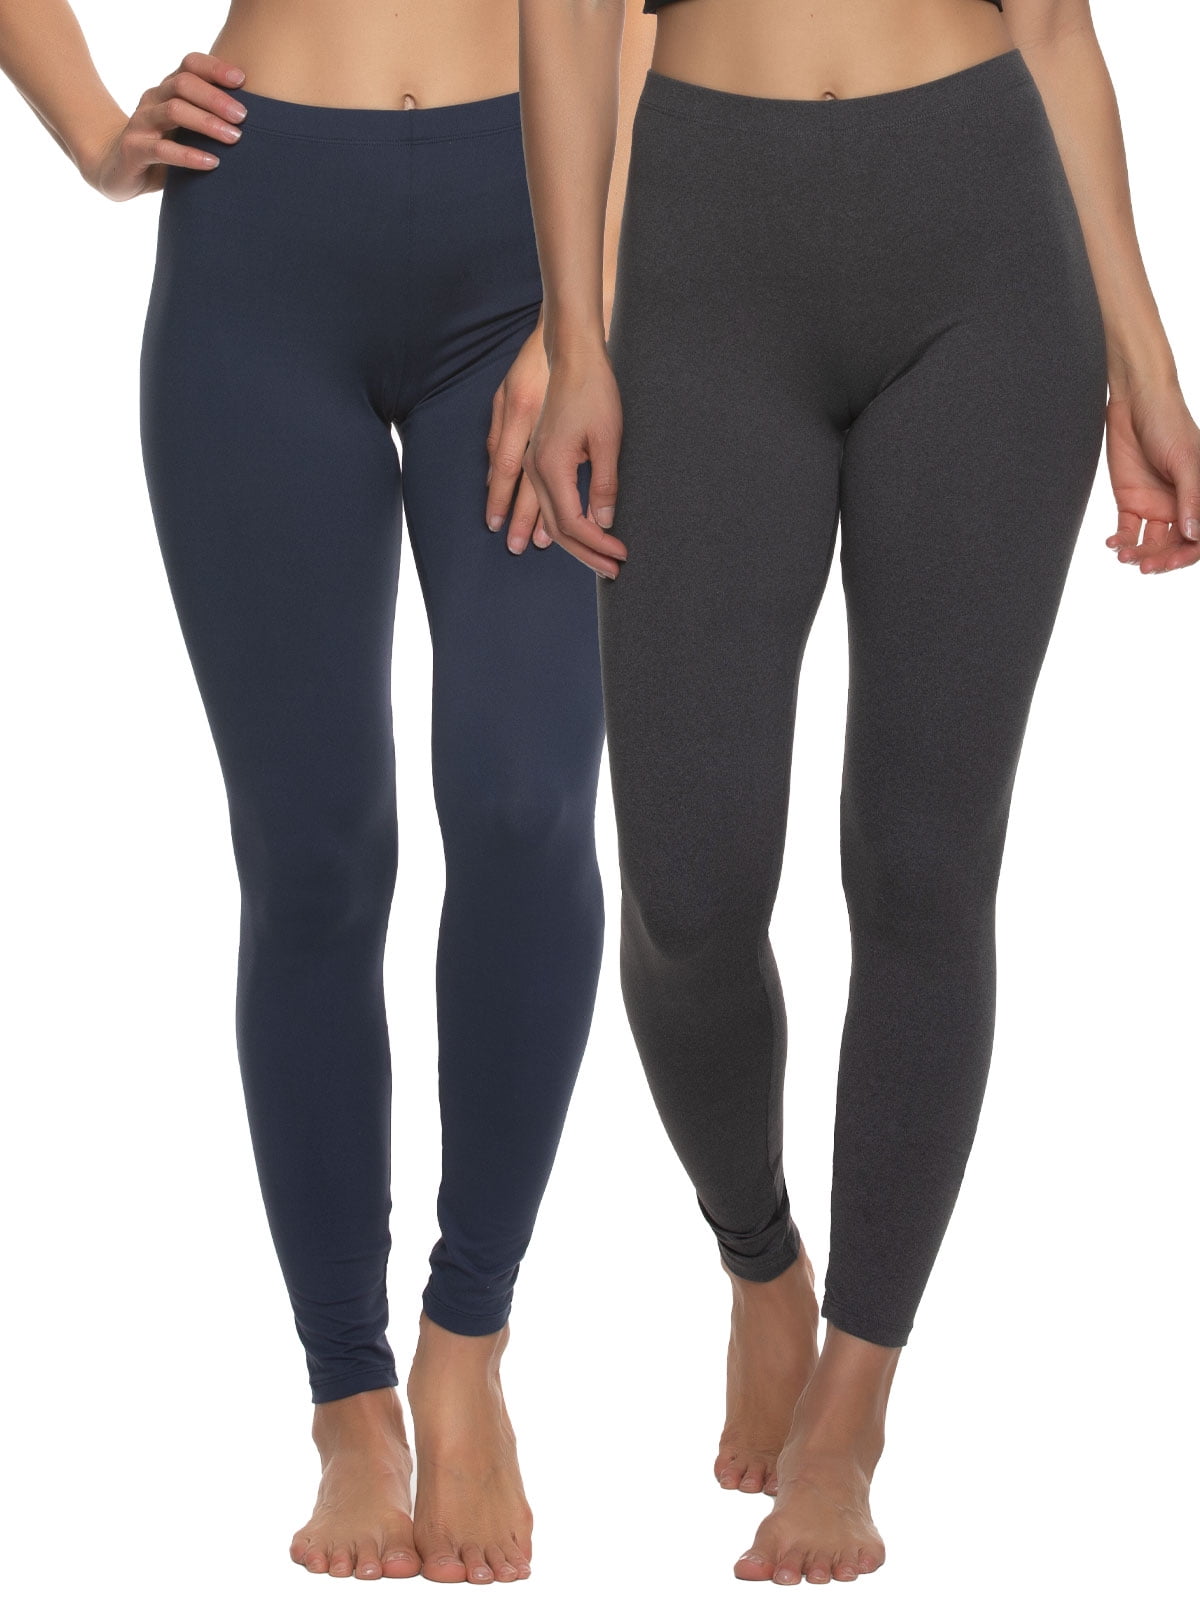 Felina Velvety Super Soft Lightweight Leggings 2-Pack - For Women - Yoga  Pants, Workout Clothes (Black, 3X) 